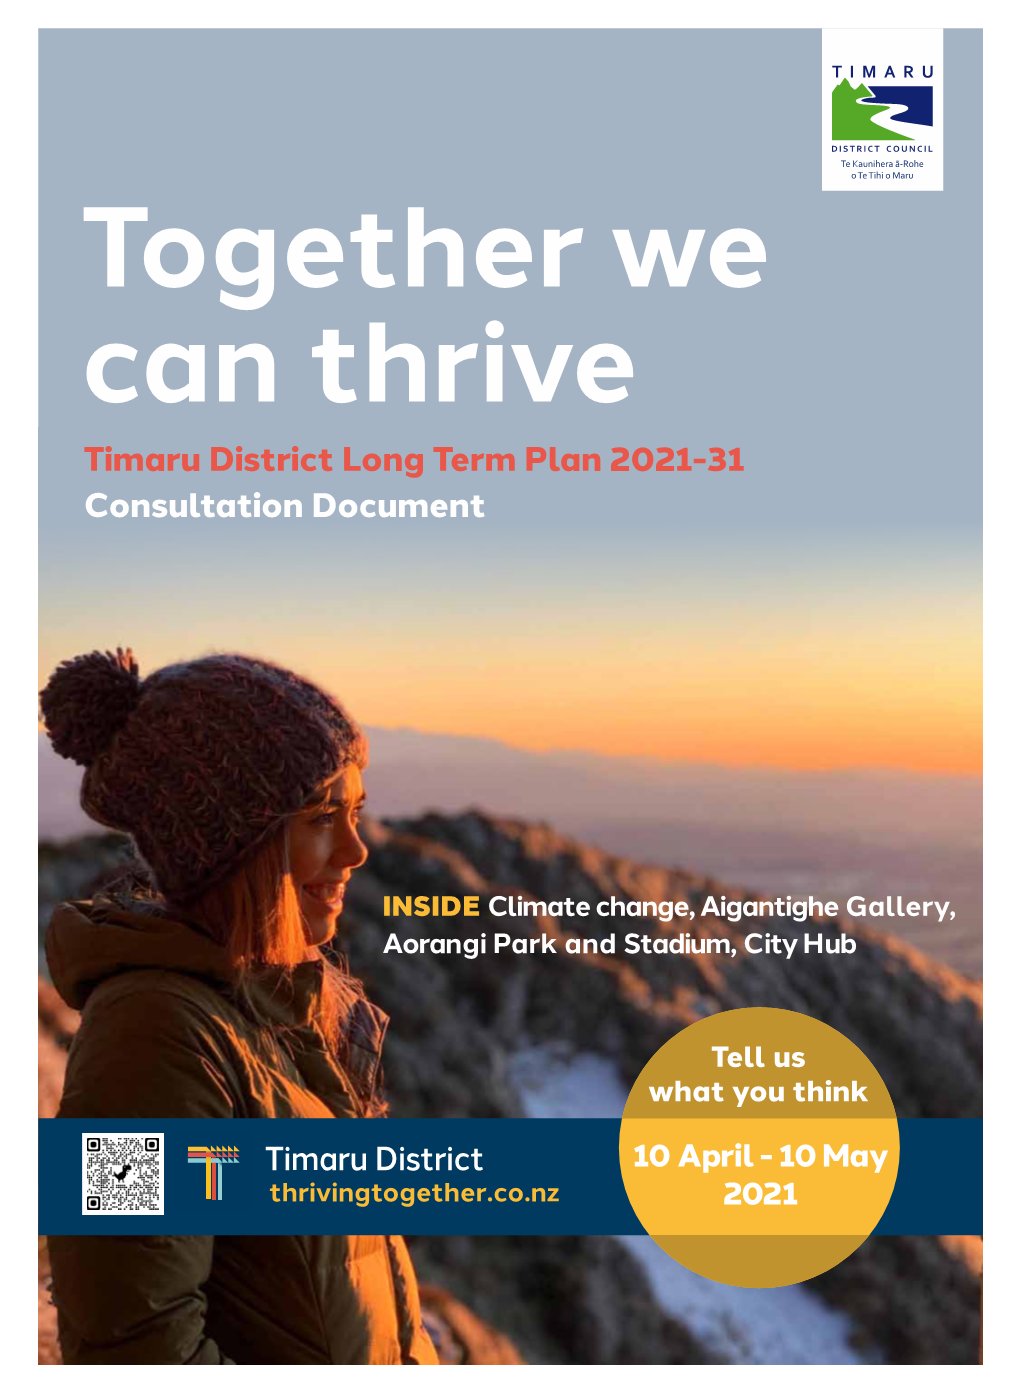 Timaru District Long Term Plan 2021-31 Consultation Document